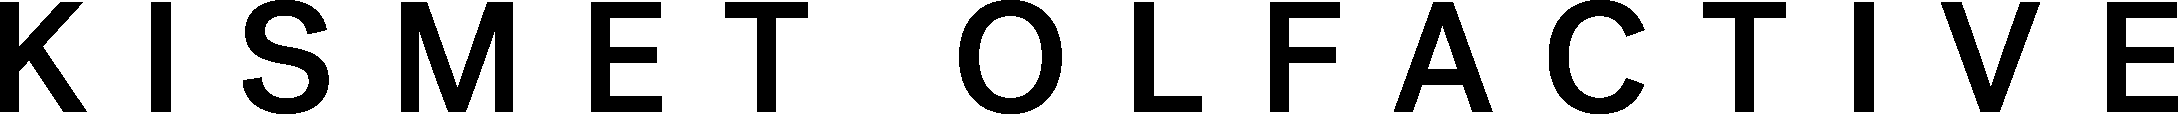 Kismet Olfactive logo